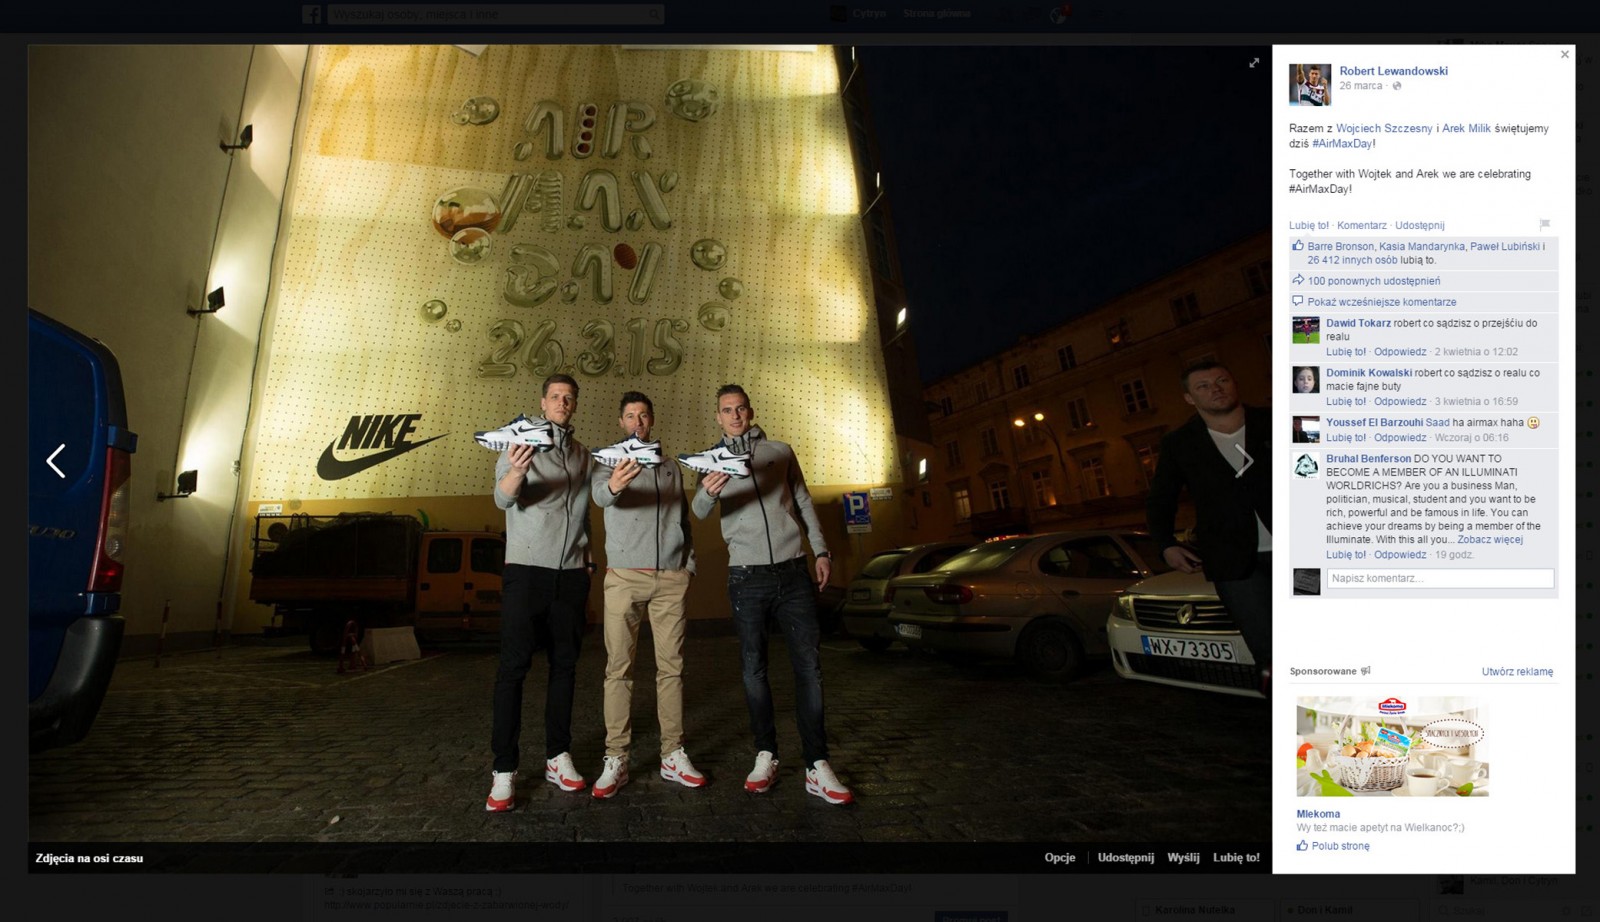 Großflächiges Kunstwerk Mural Nike Airmax Bracka in Warschau Wojciech Szczesny Arek Milik Robert Lewandowski  | Airmax Day | Portfolio